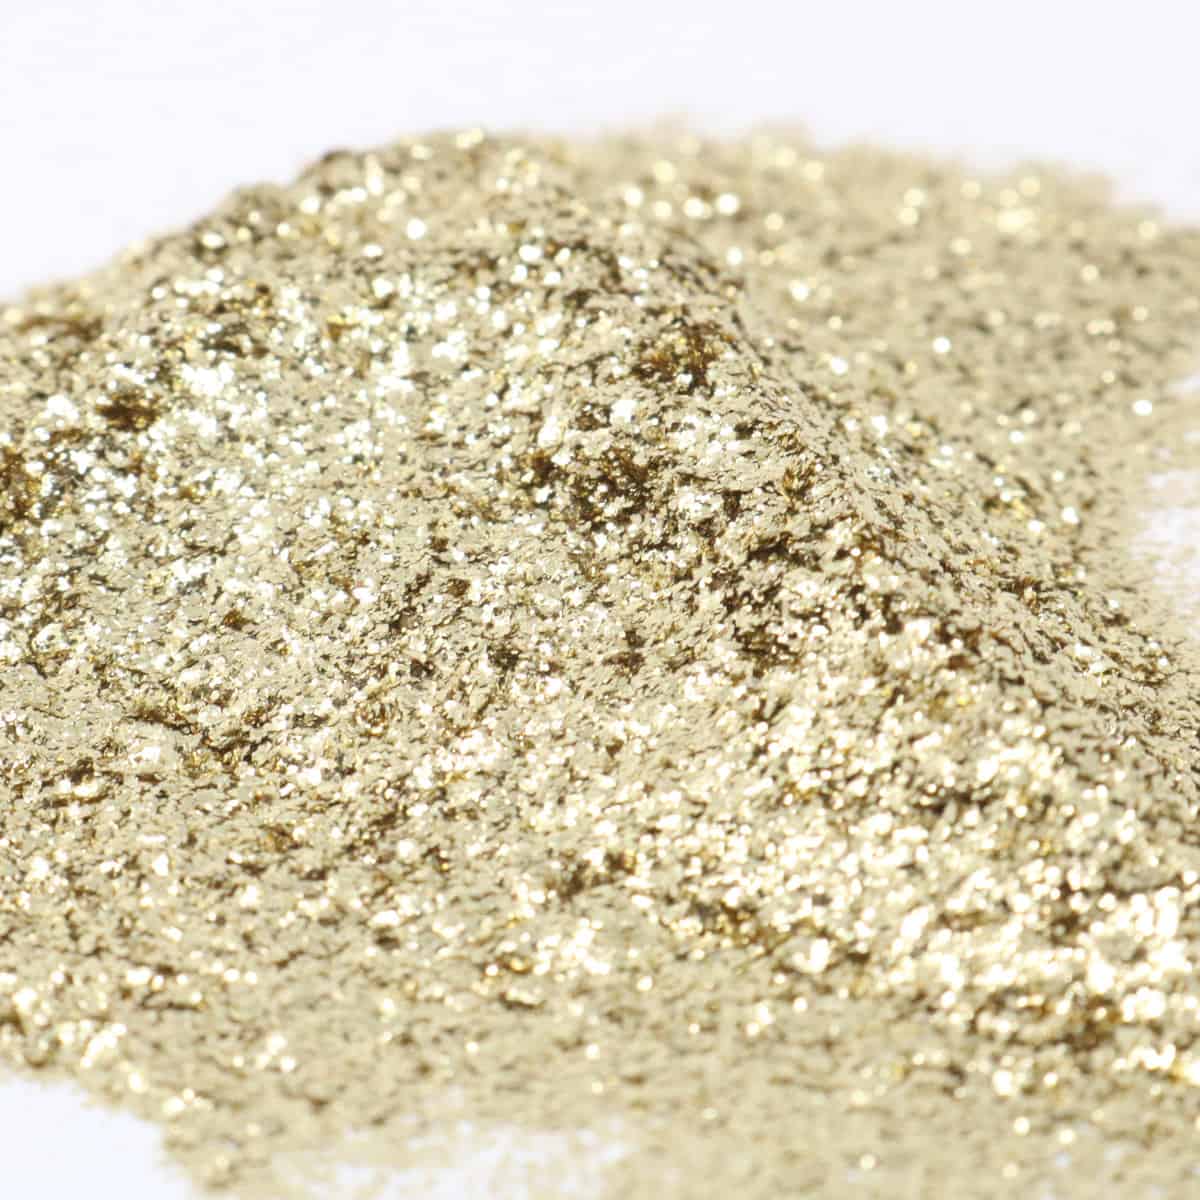 Fine gold metal glitter flakes